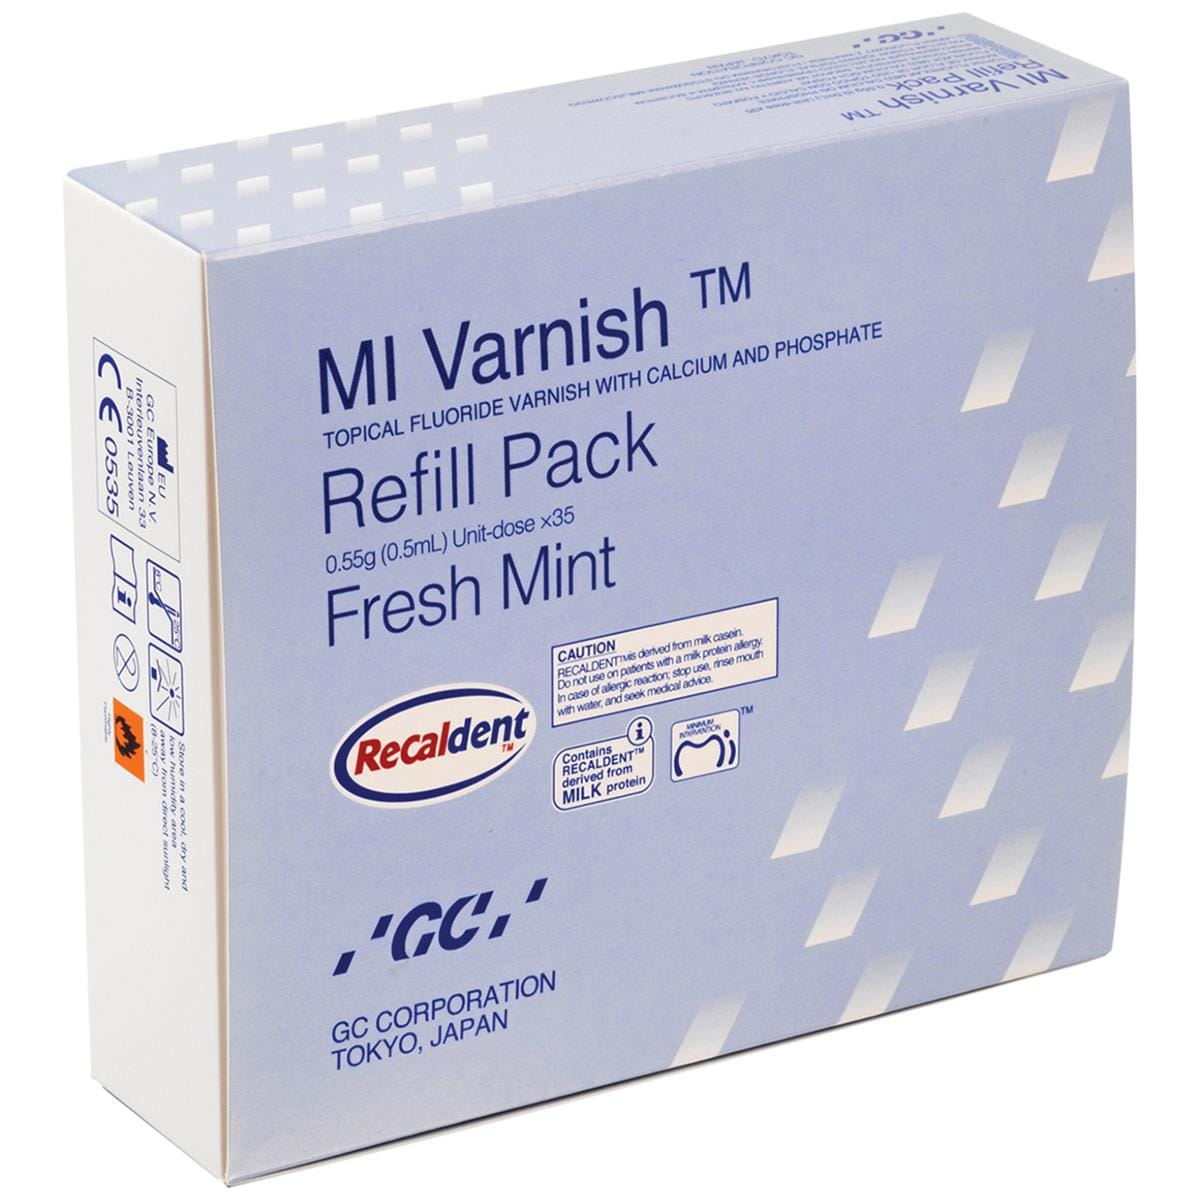 Mi Varnish Refill Mint Unit Dose 35pk